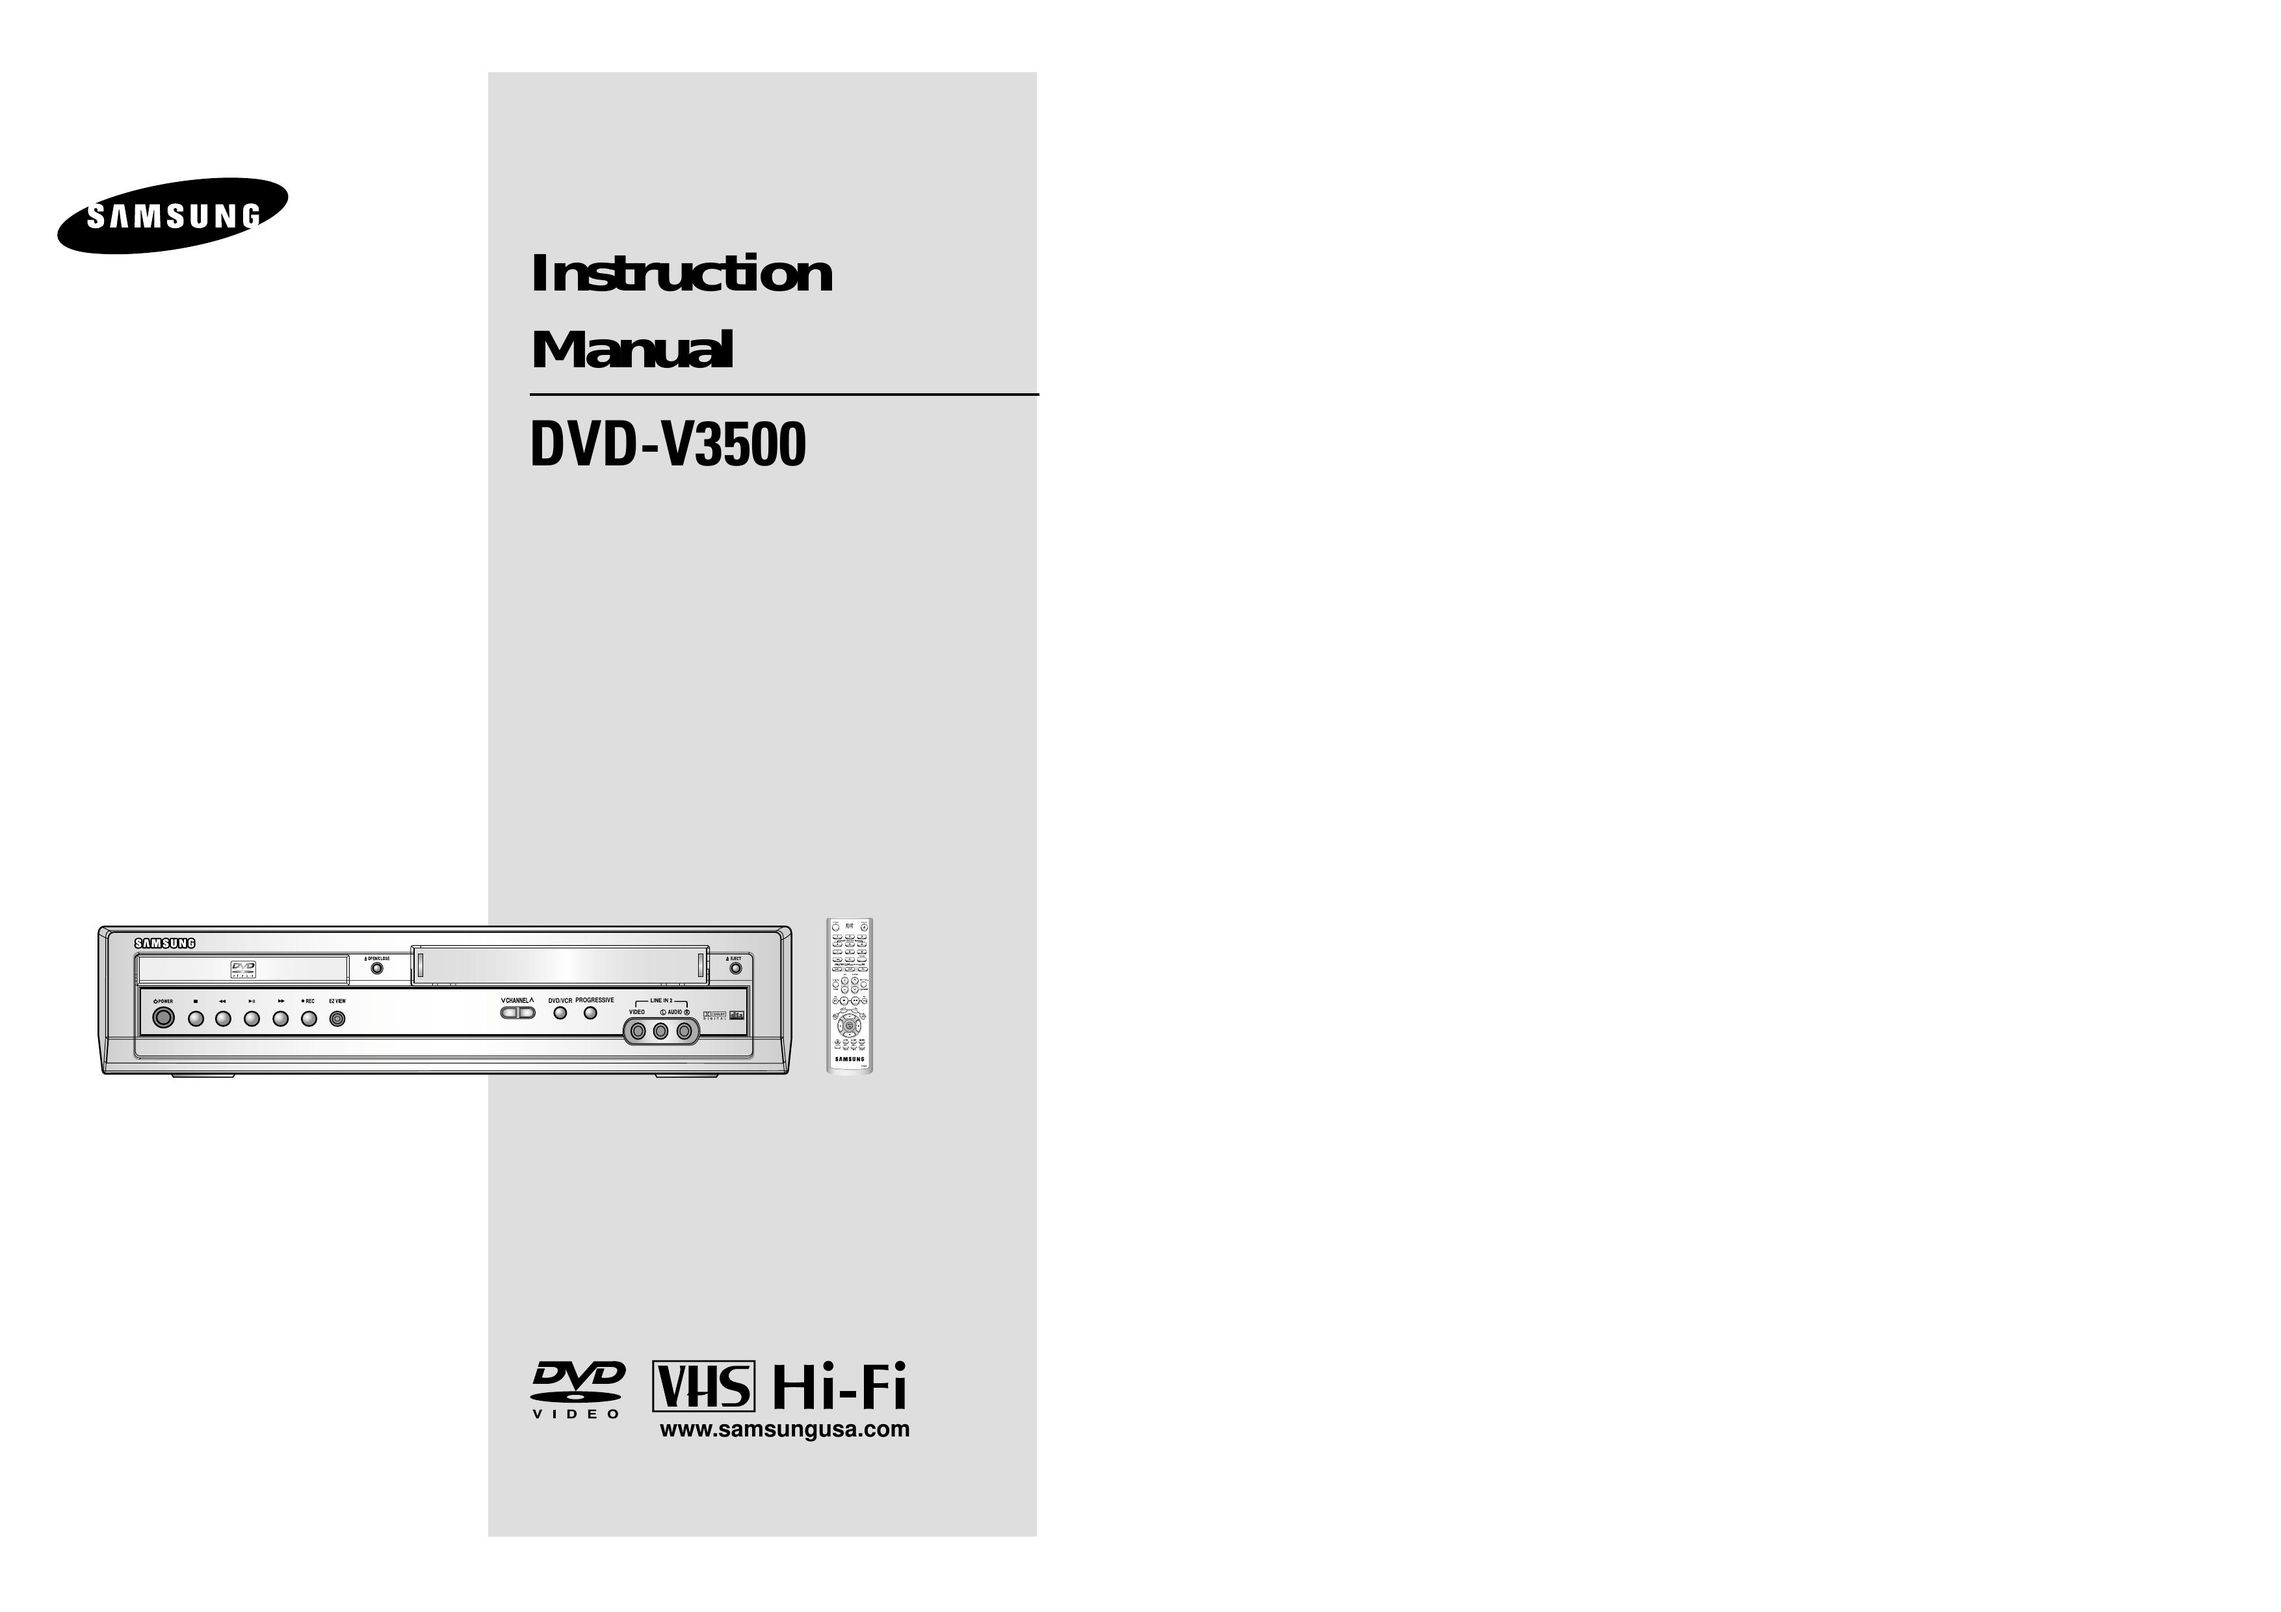 Samsung DVD-V3500 MP3 Player User Manual